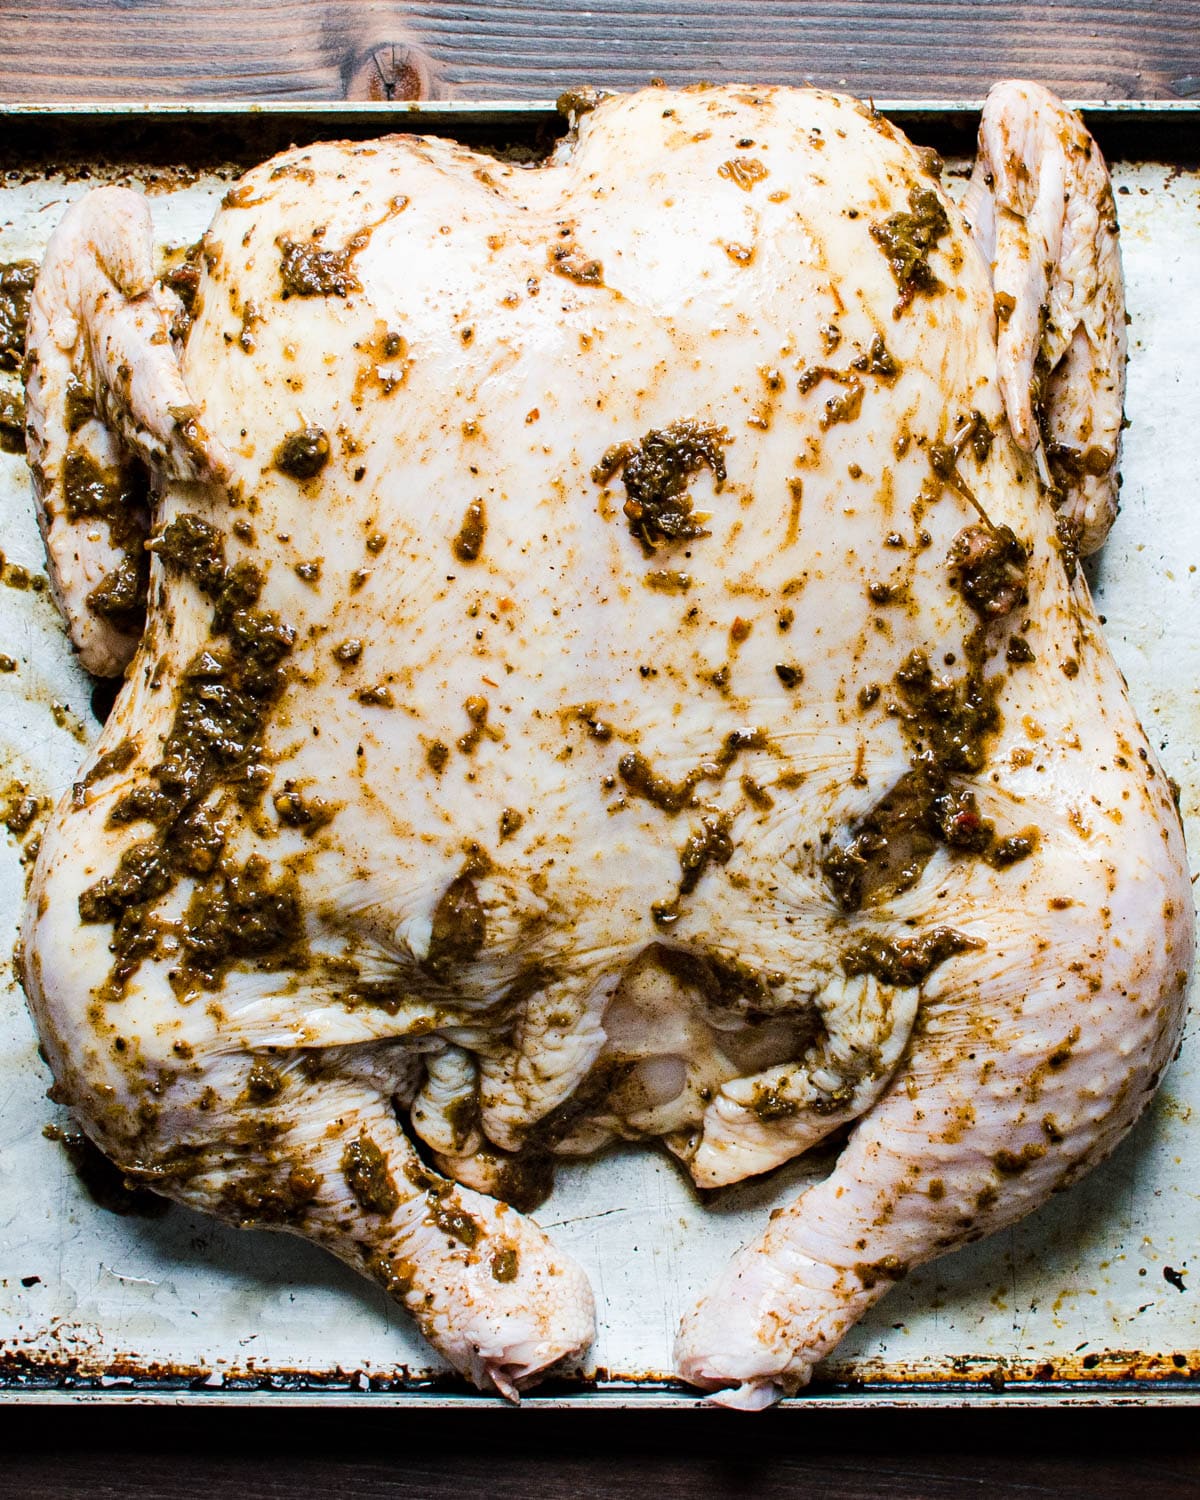 Coating the spatchcock chicken with jerk seasoning.